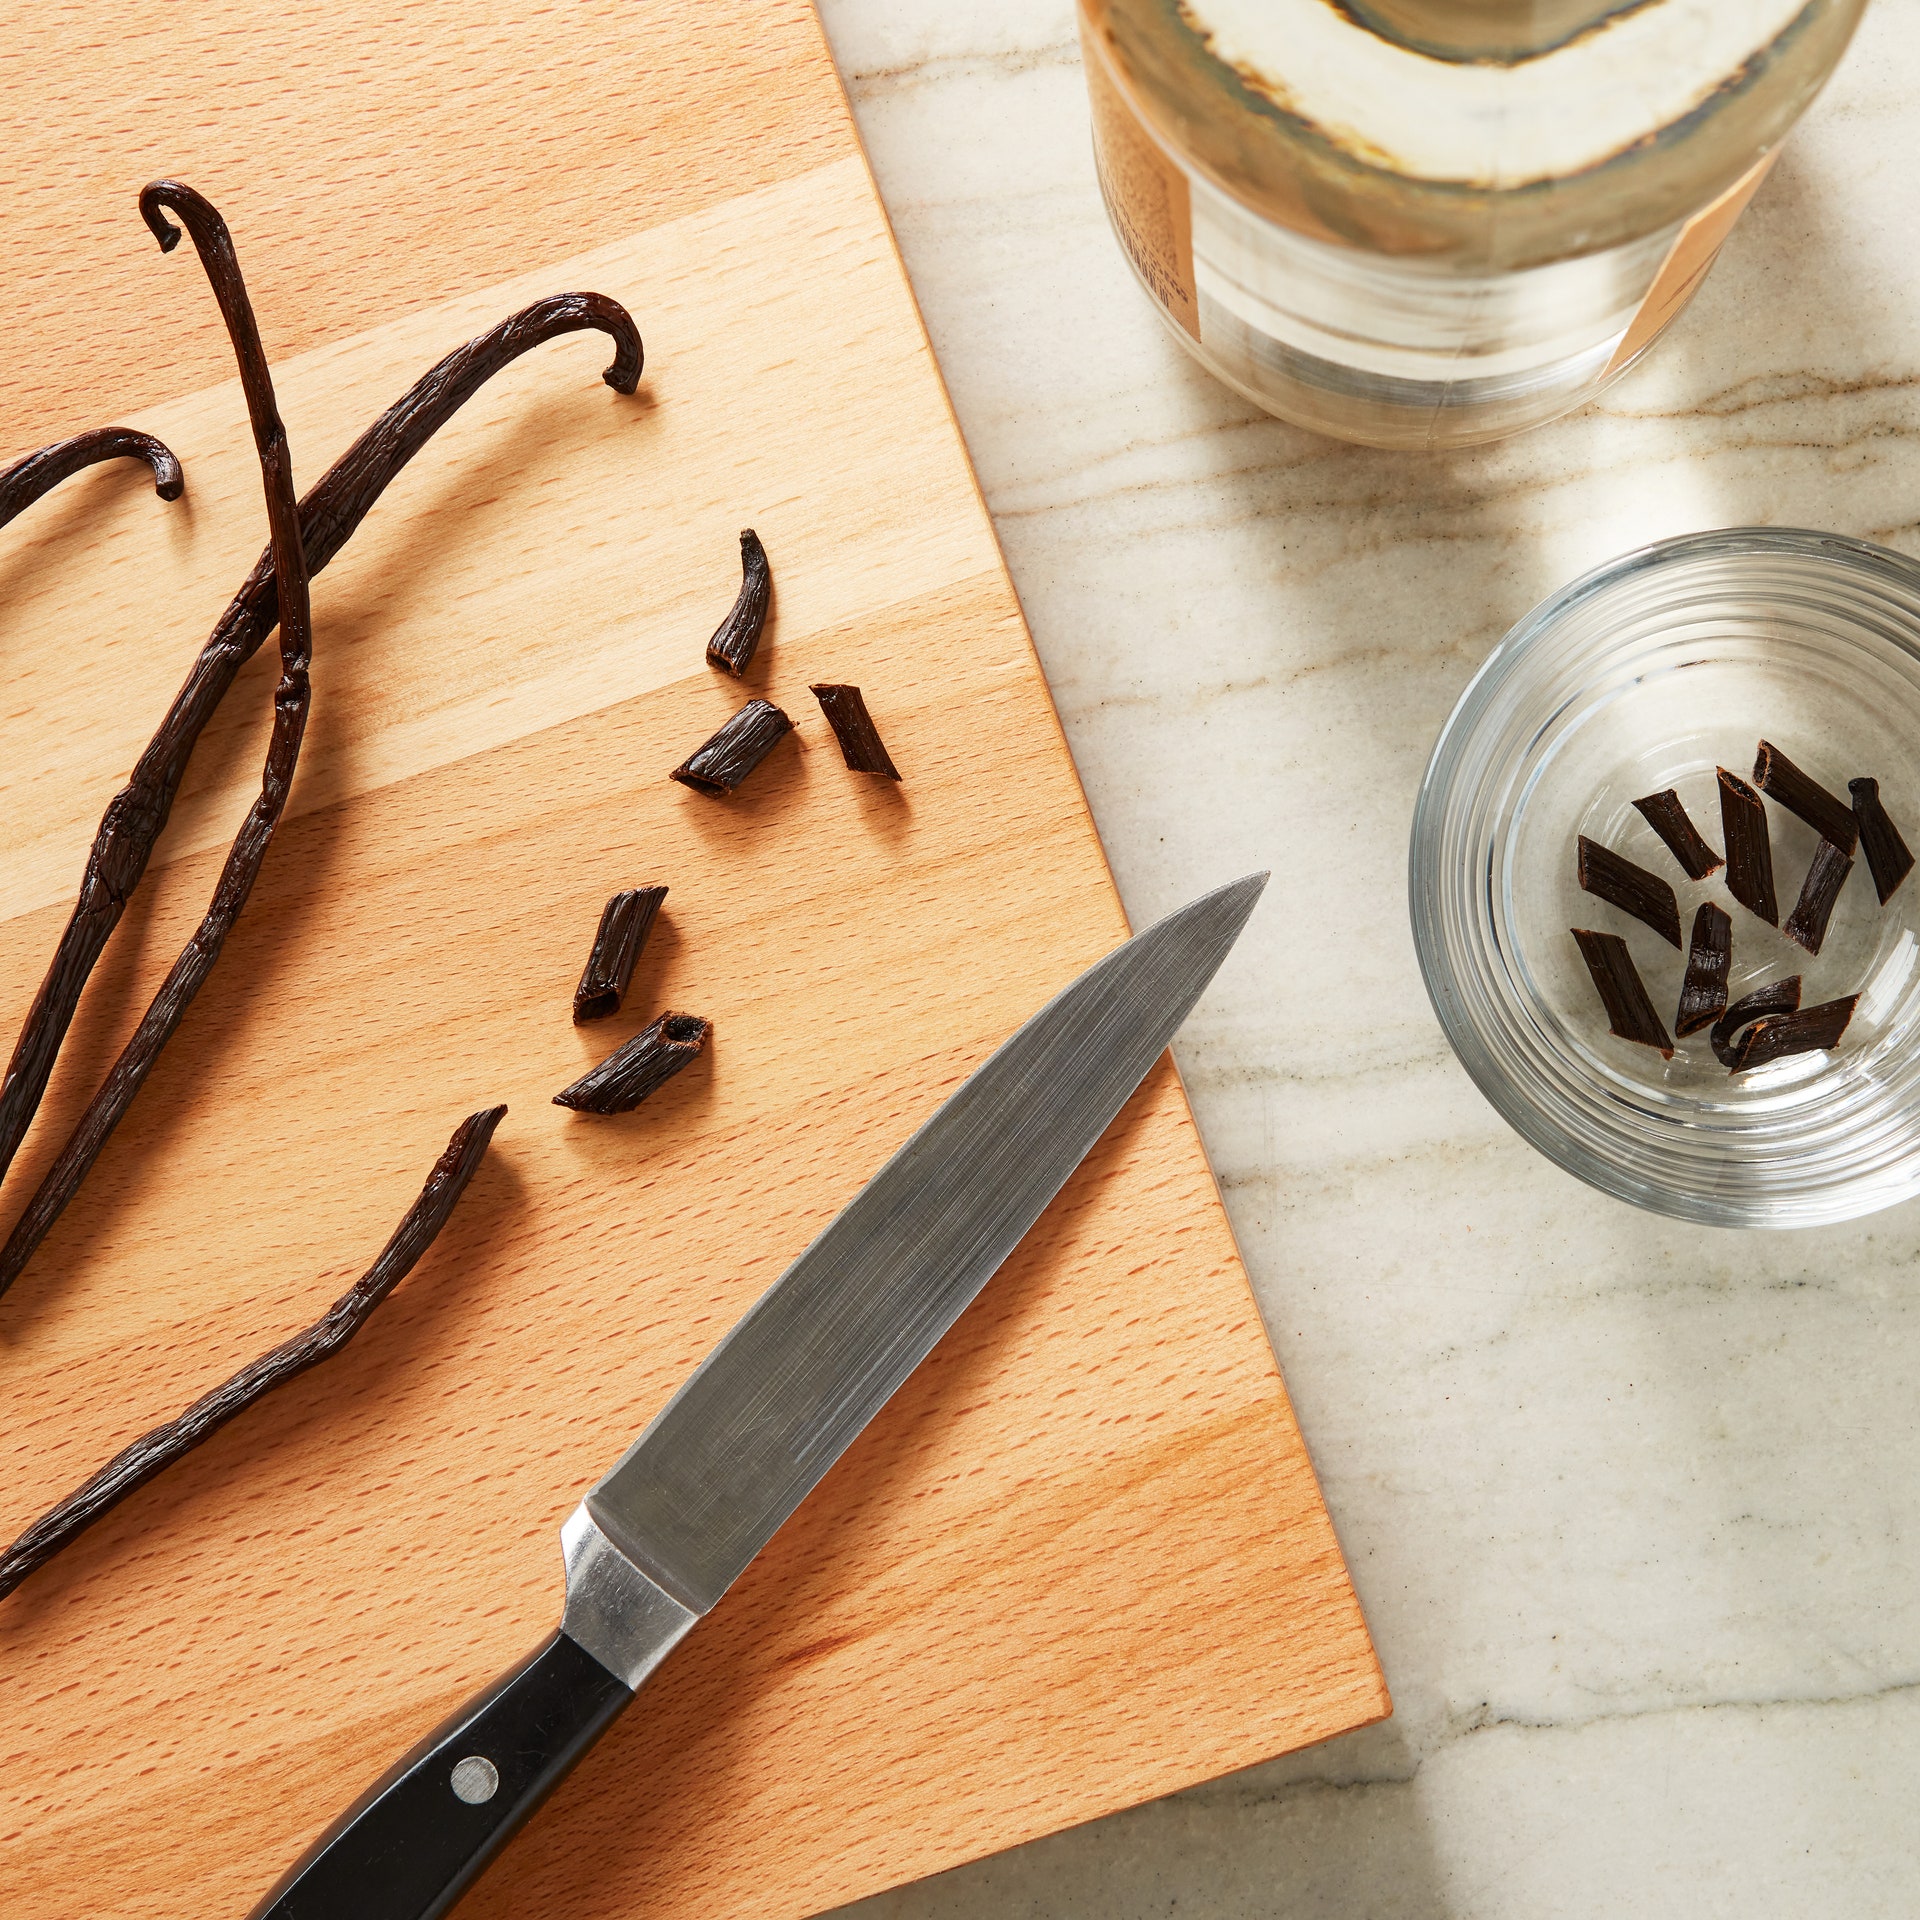 Cutting a vanilla bean on a cutting board.